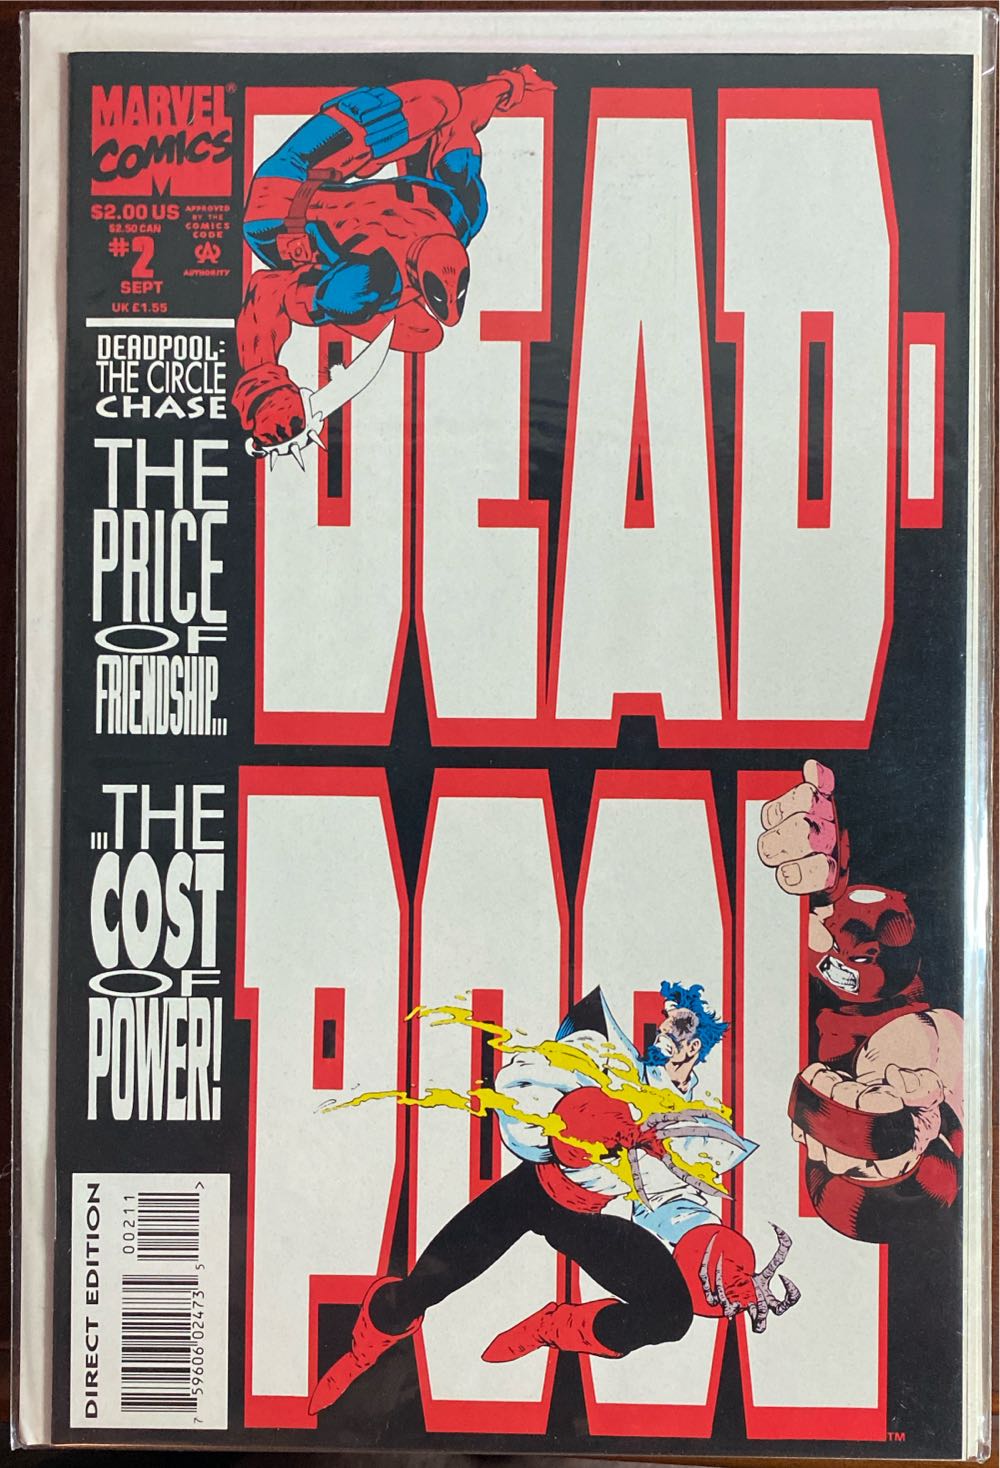 Deadpool: The Circle Chase Vol 1 - Marvel Comics (2 - Sep 1993) comic book collectible [Barcode 071486024736] - Main Image 2